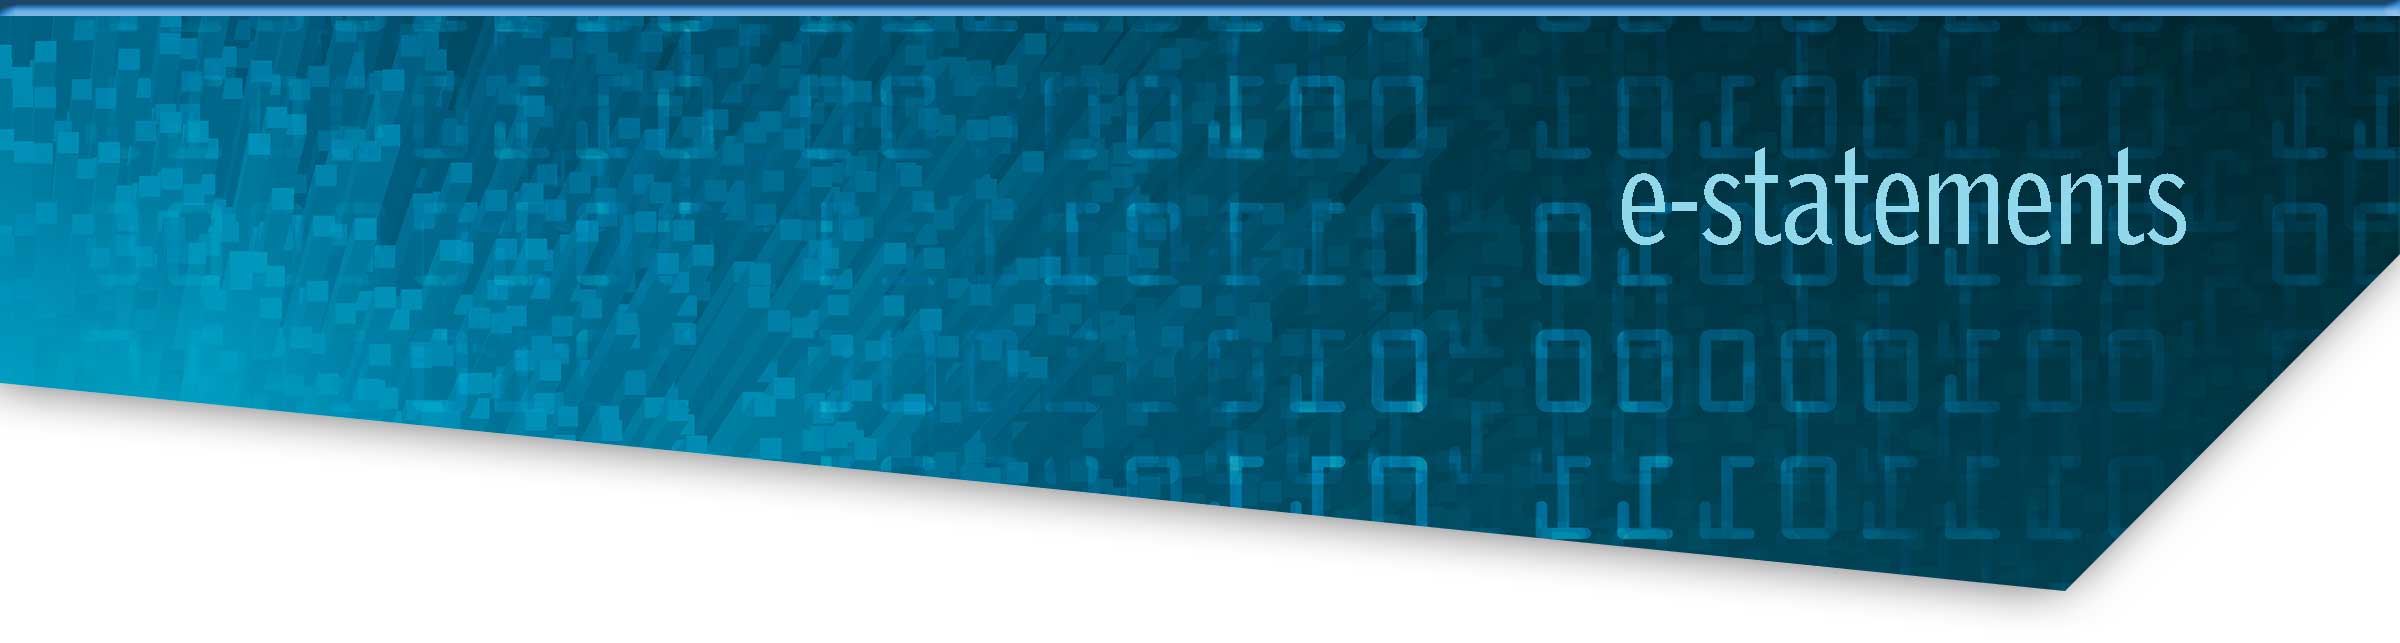 blue digital board with e-statement title